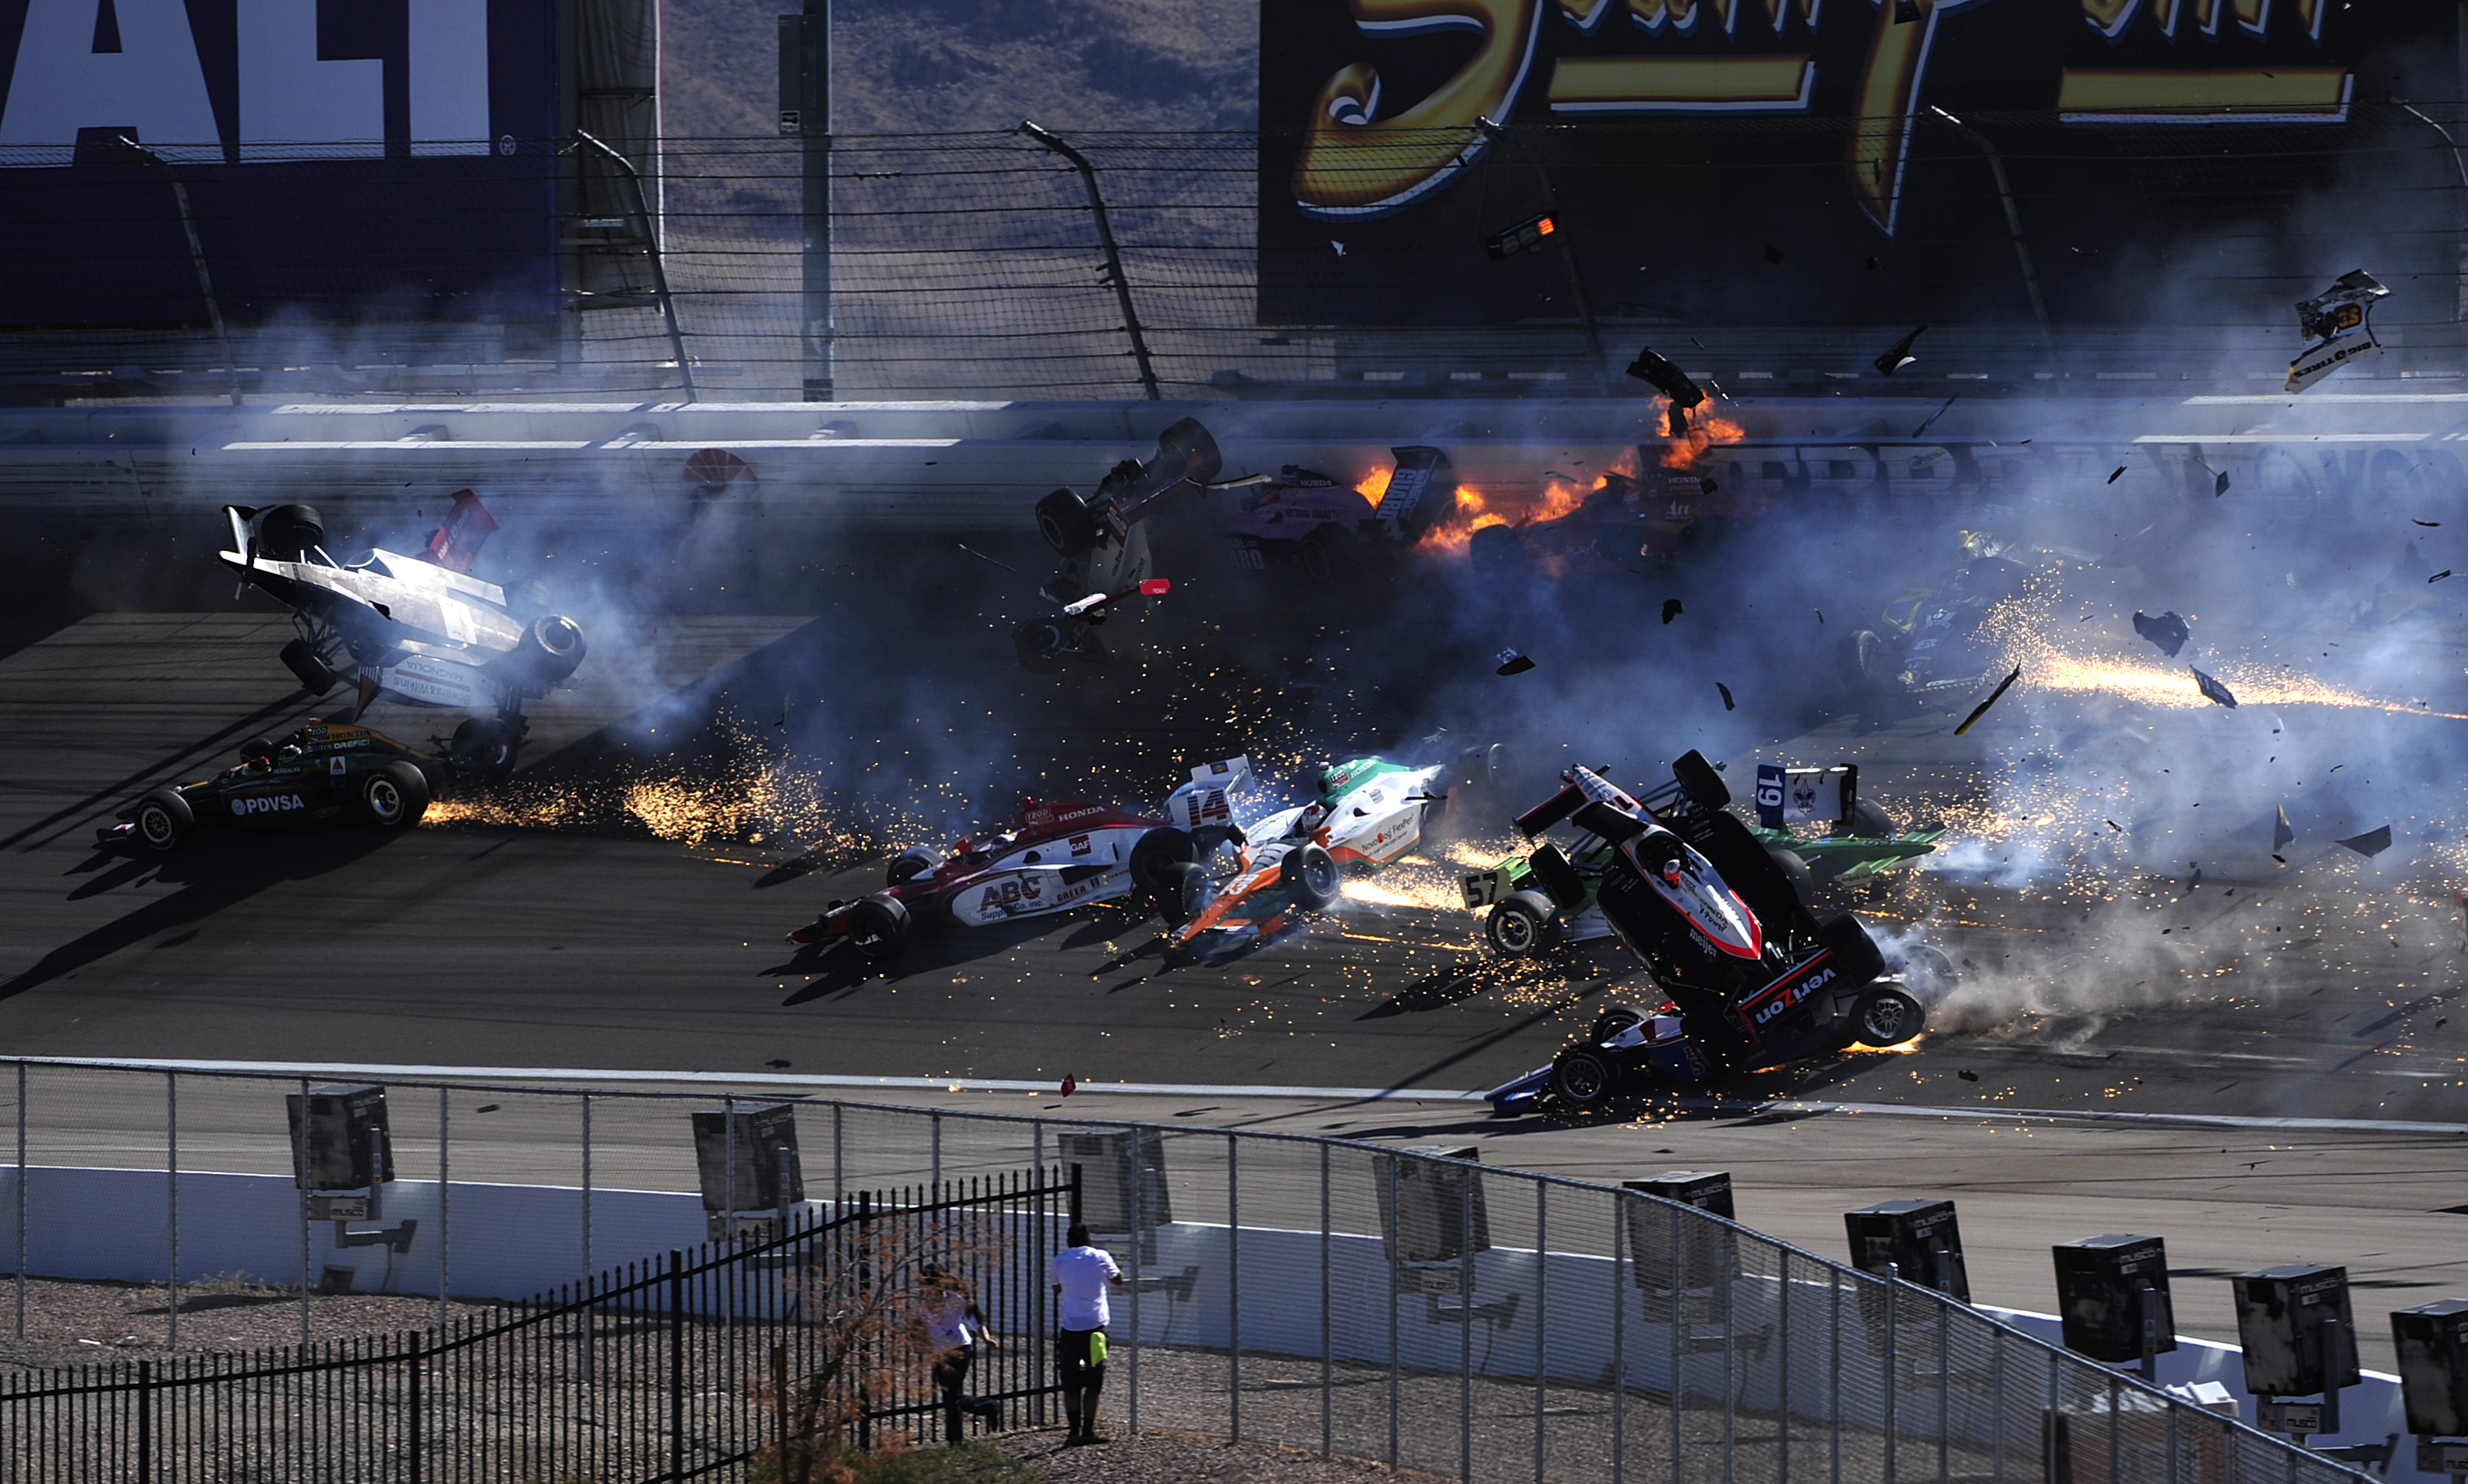 Racing Race Cars Accidents Crash IndyCar Smoke Sparks 3166x1904